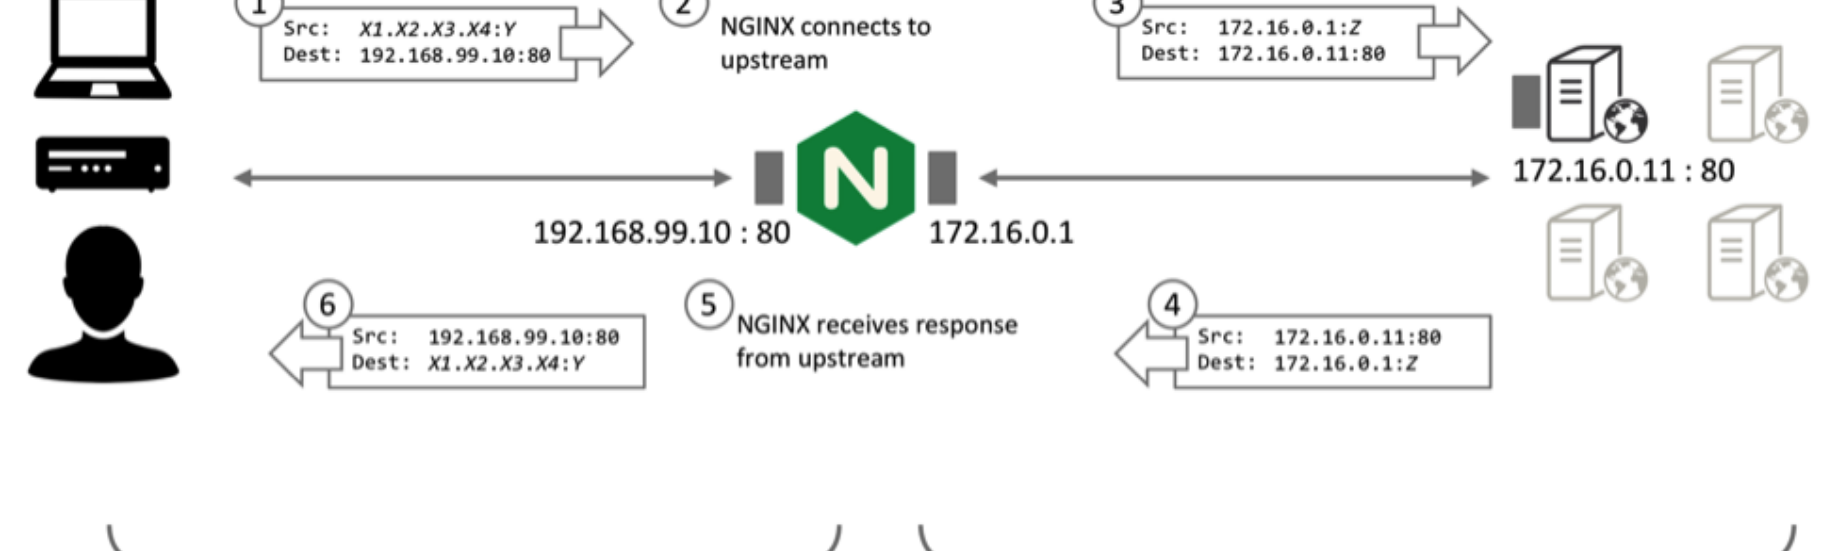 Configure Jenkins with SSL using an Nginx